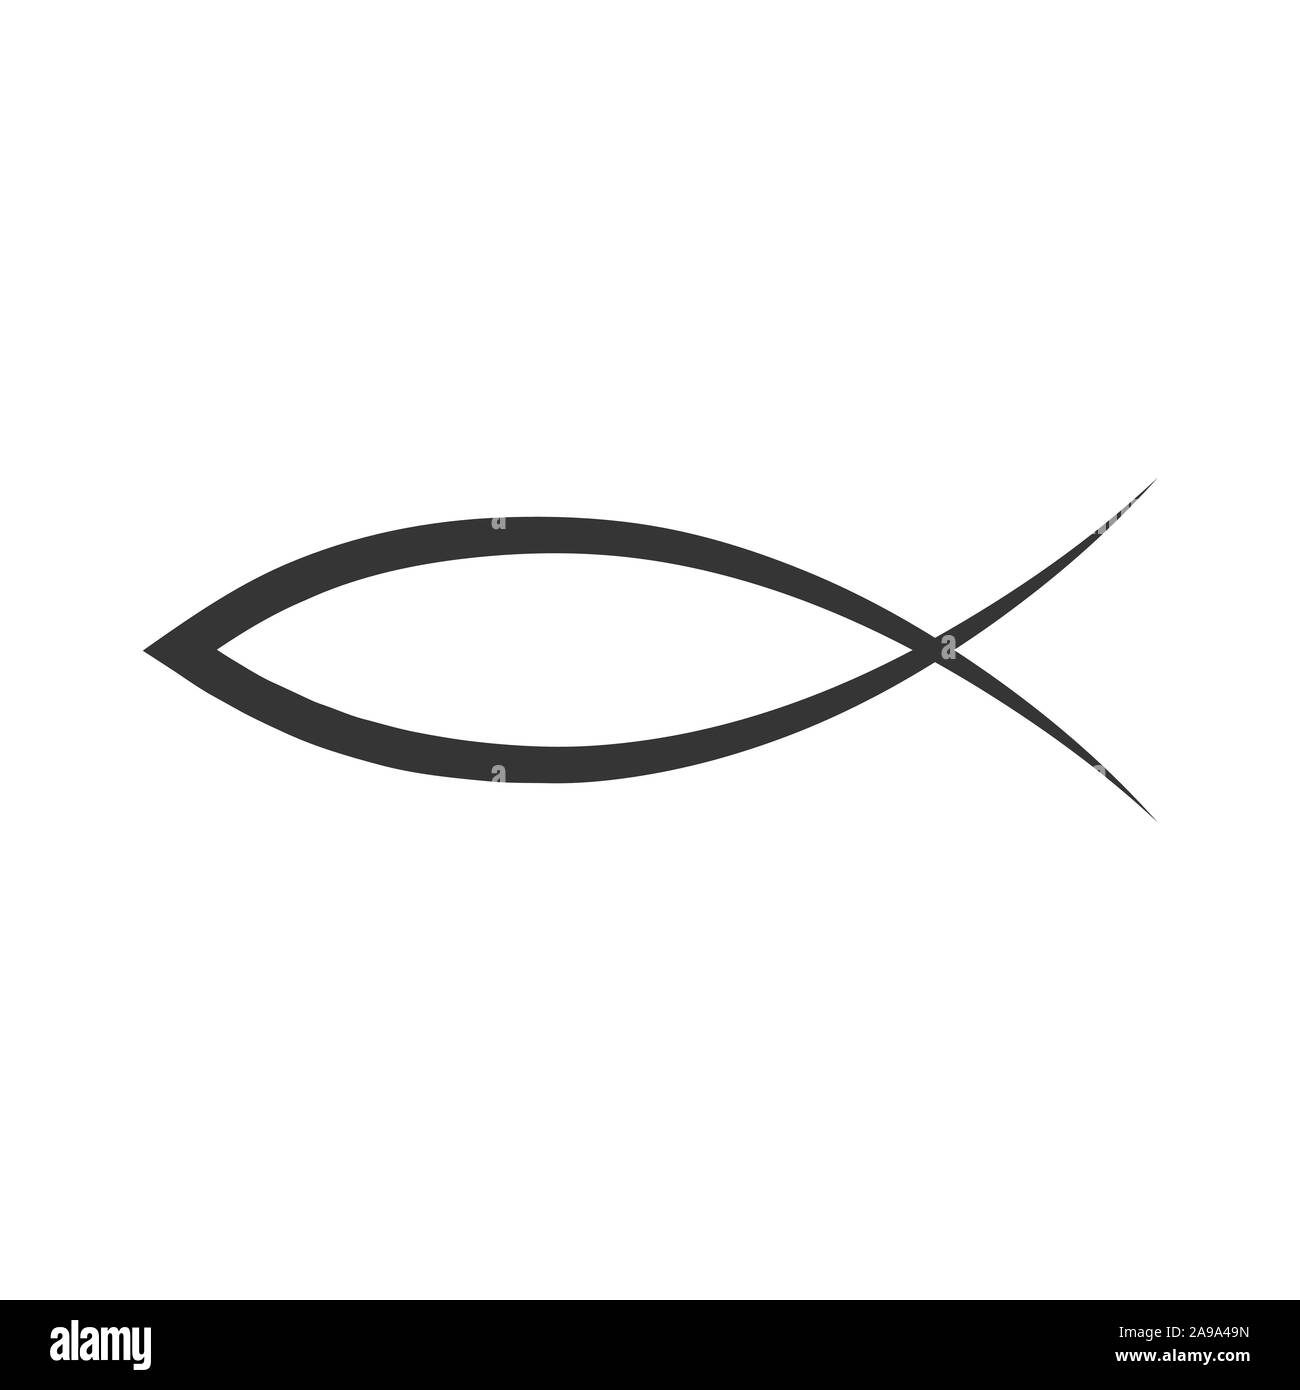 christian fish symbol with cross tattoo